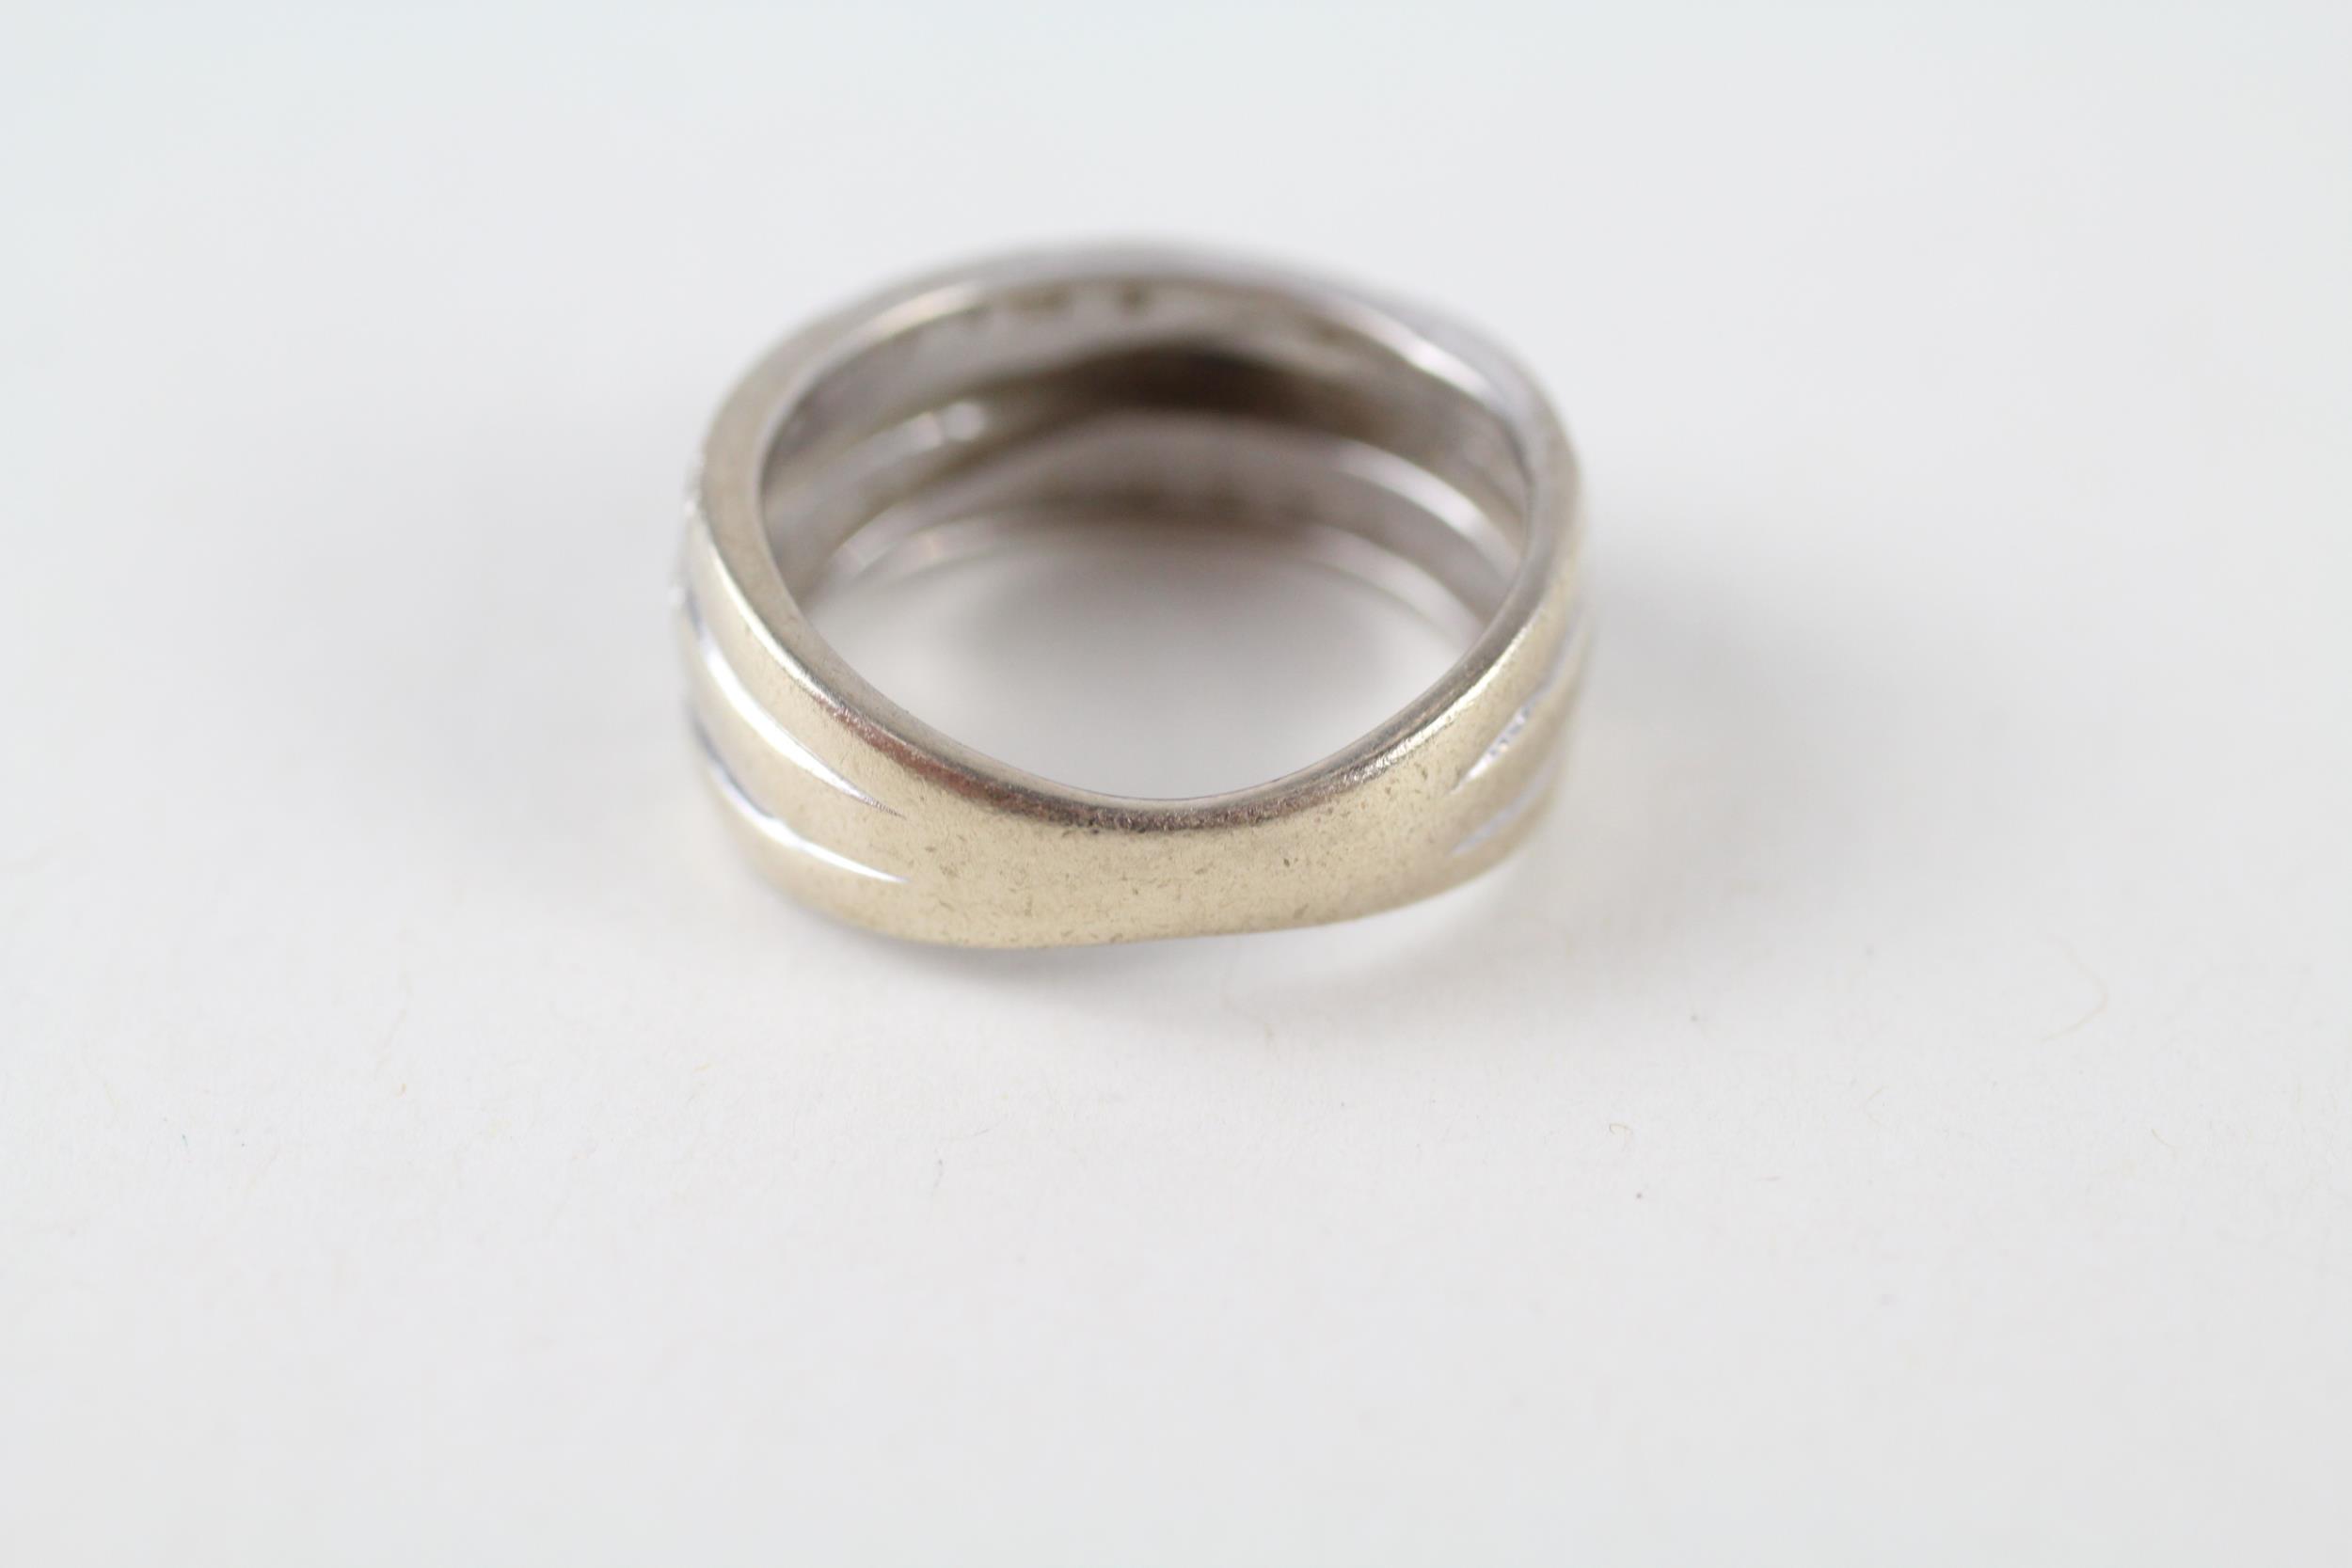 9ct white gold diamond dress ring (3.5g) Size I 1/2 - Image 4 of 4